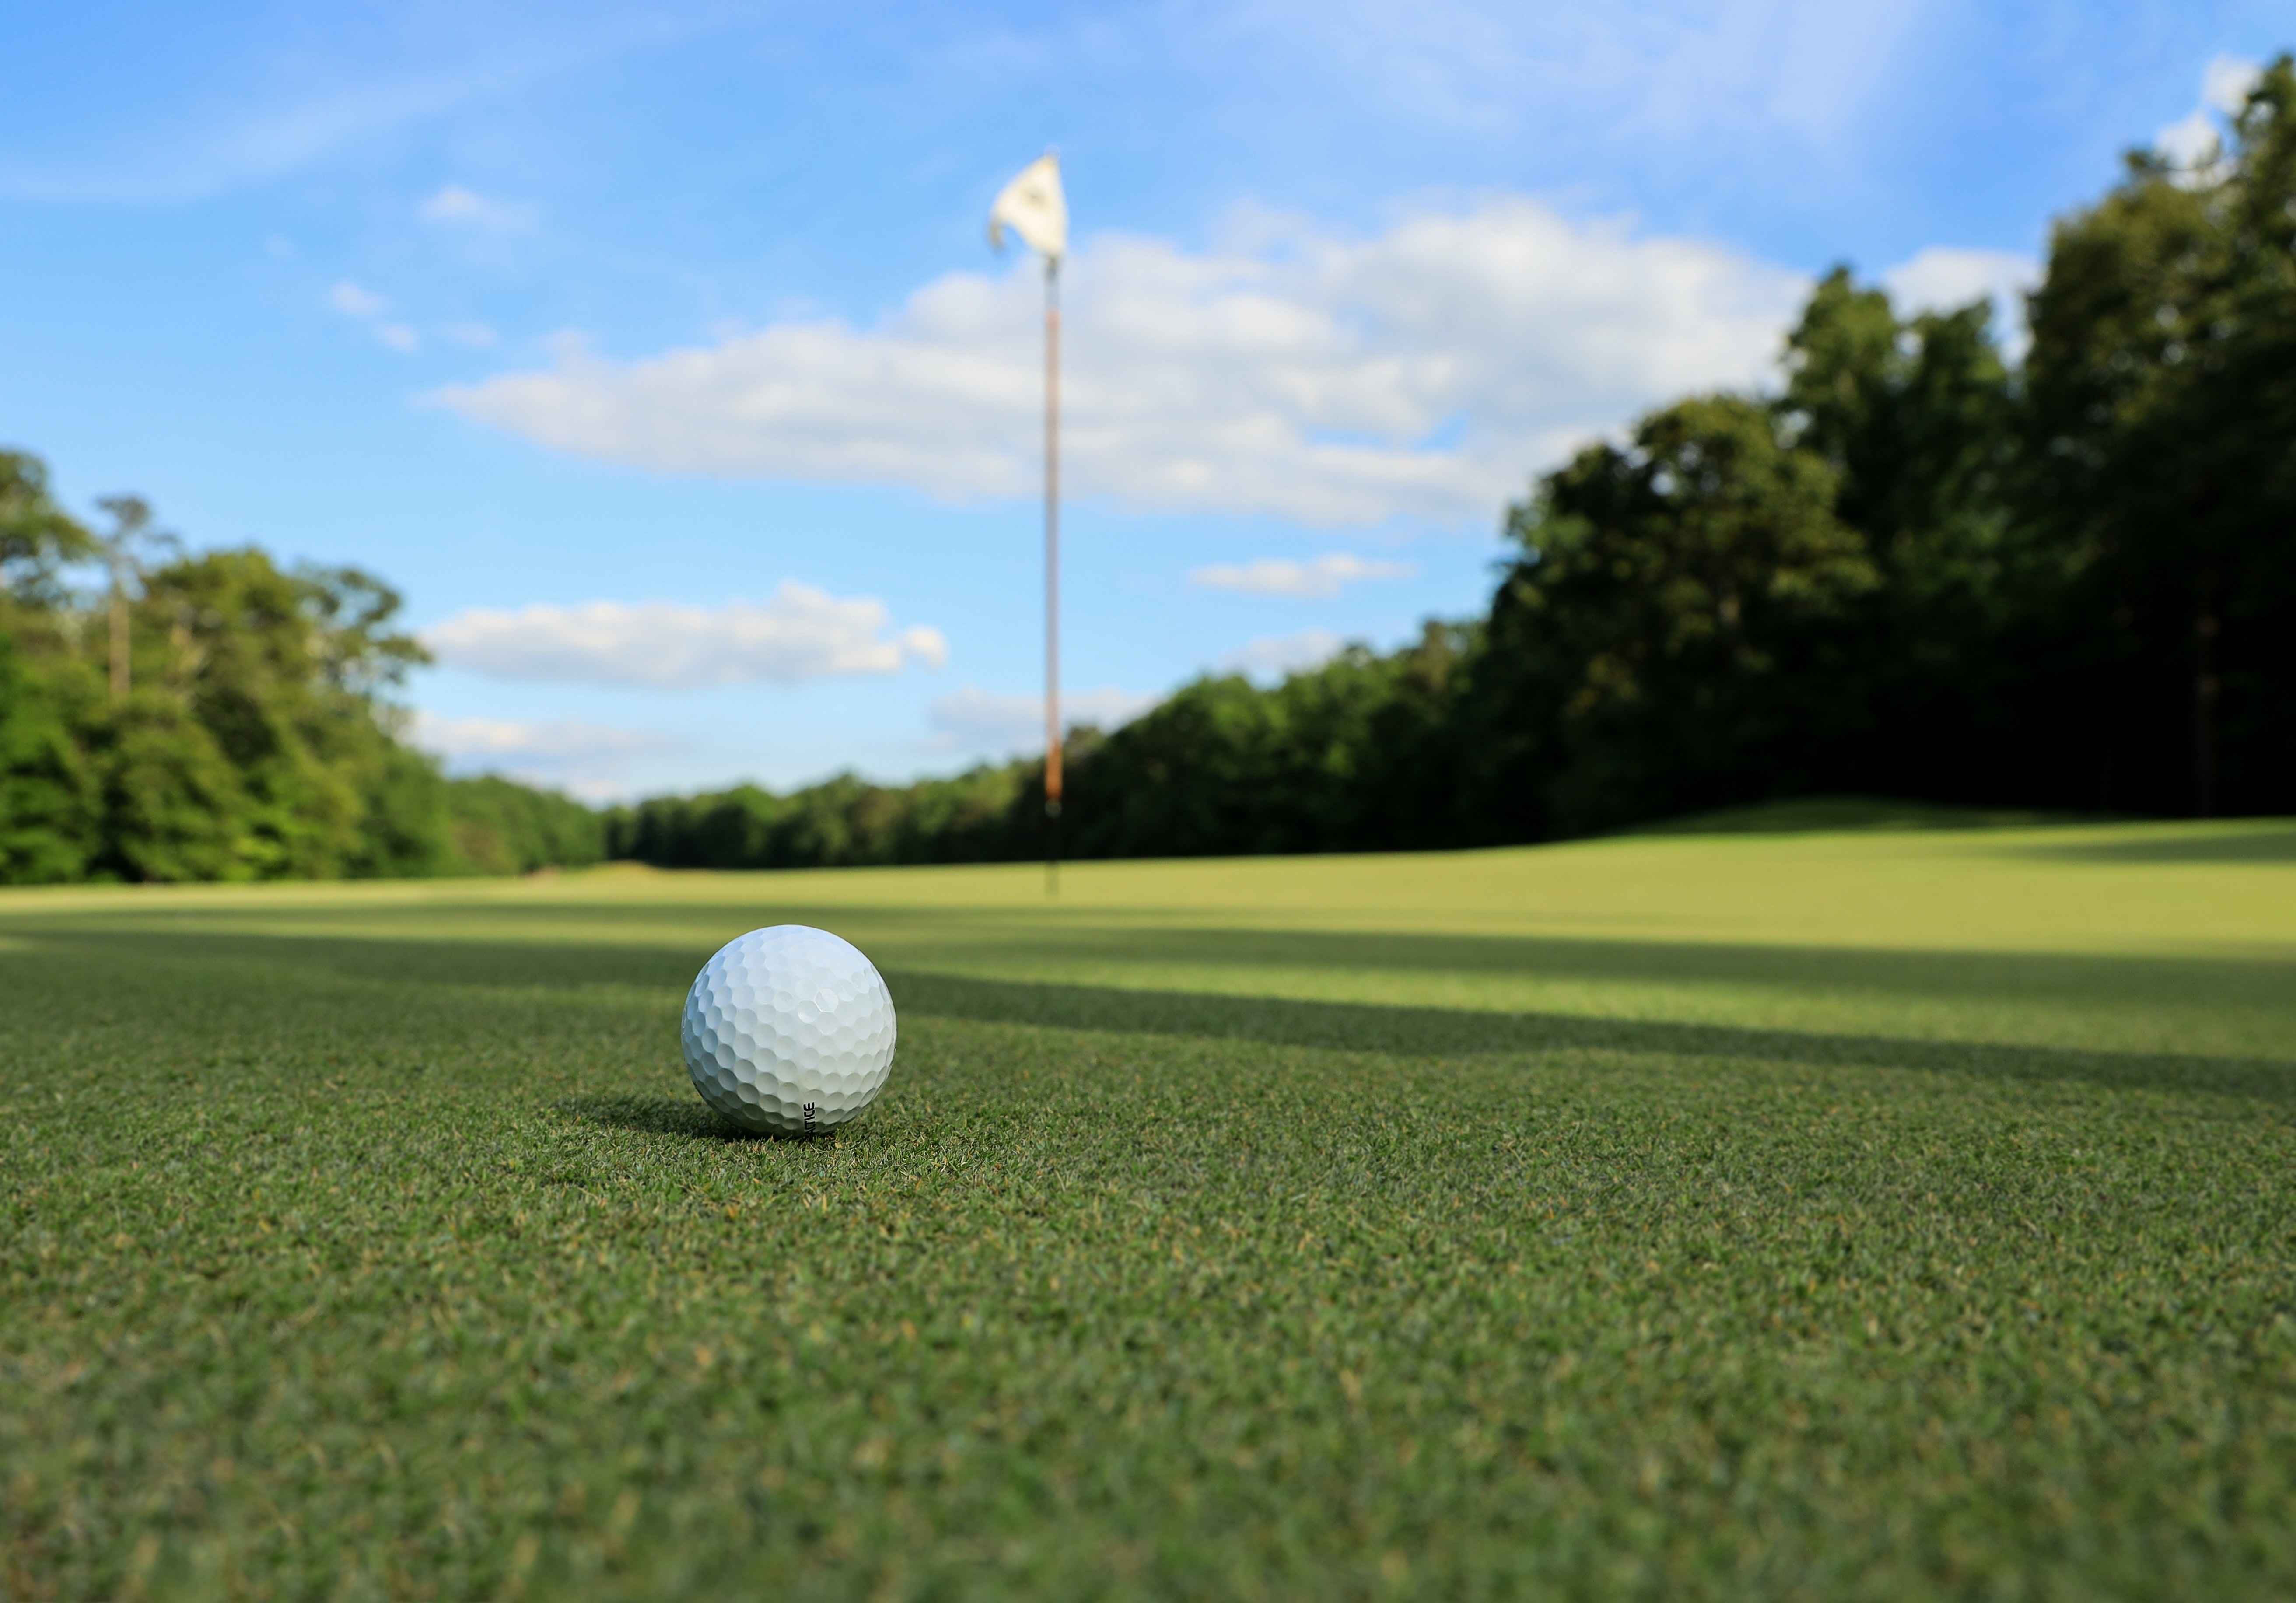 Close up on golf ball near hole with flag